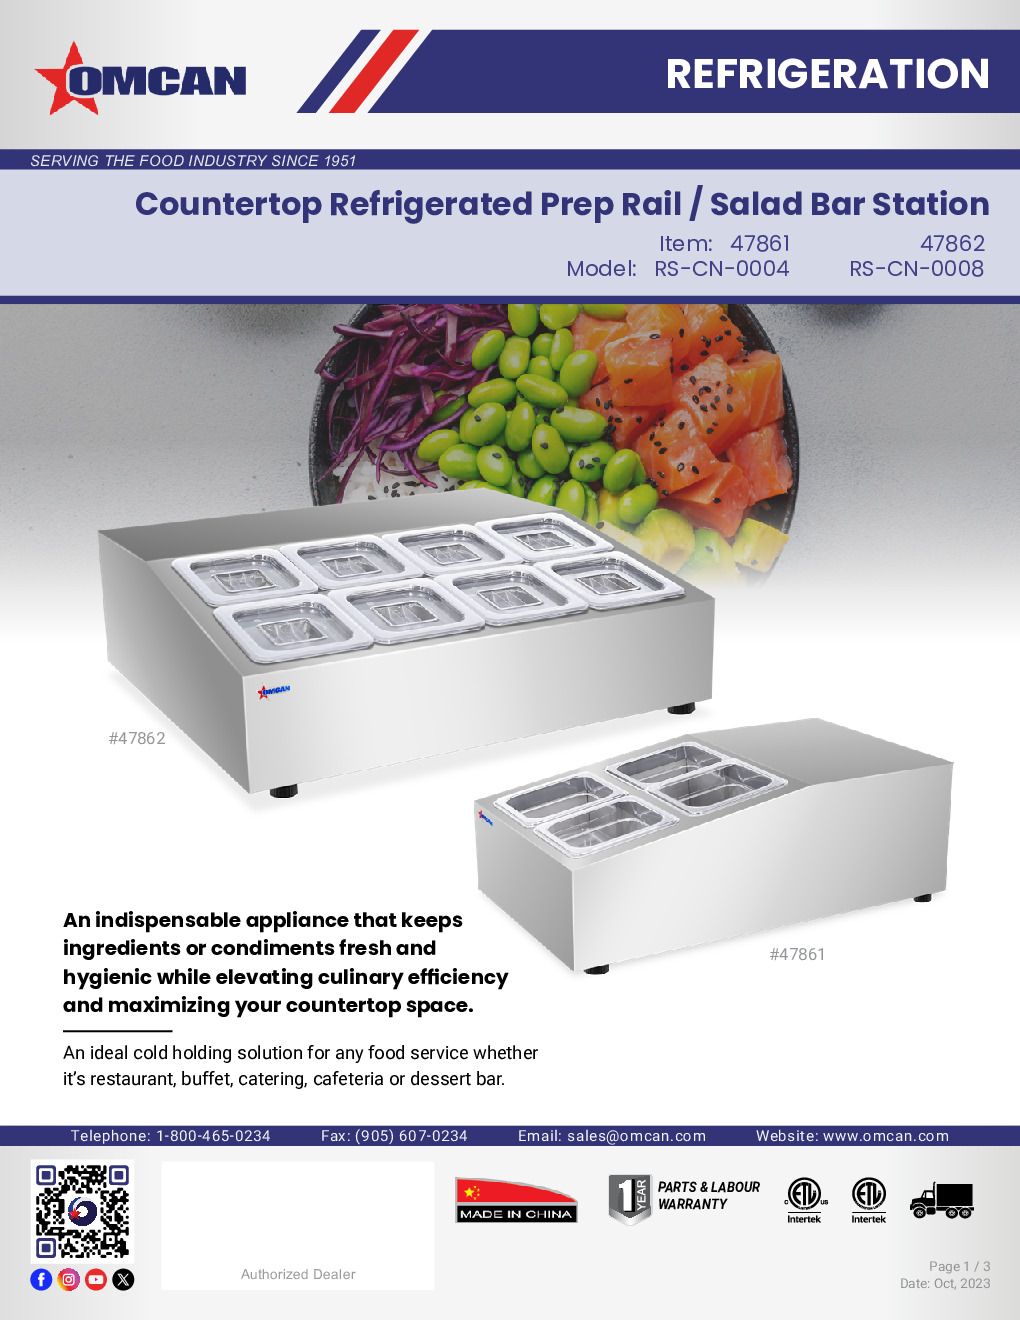 Omcan USA 47862 Refrigerated Countertop Pan Rail